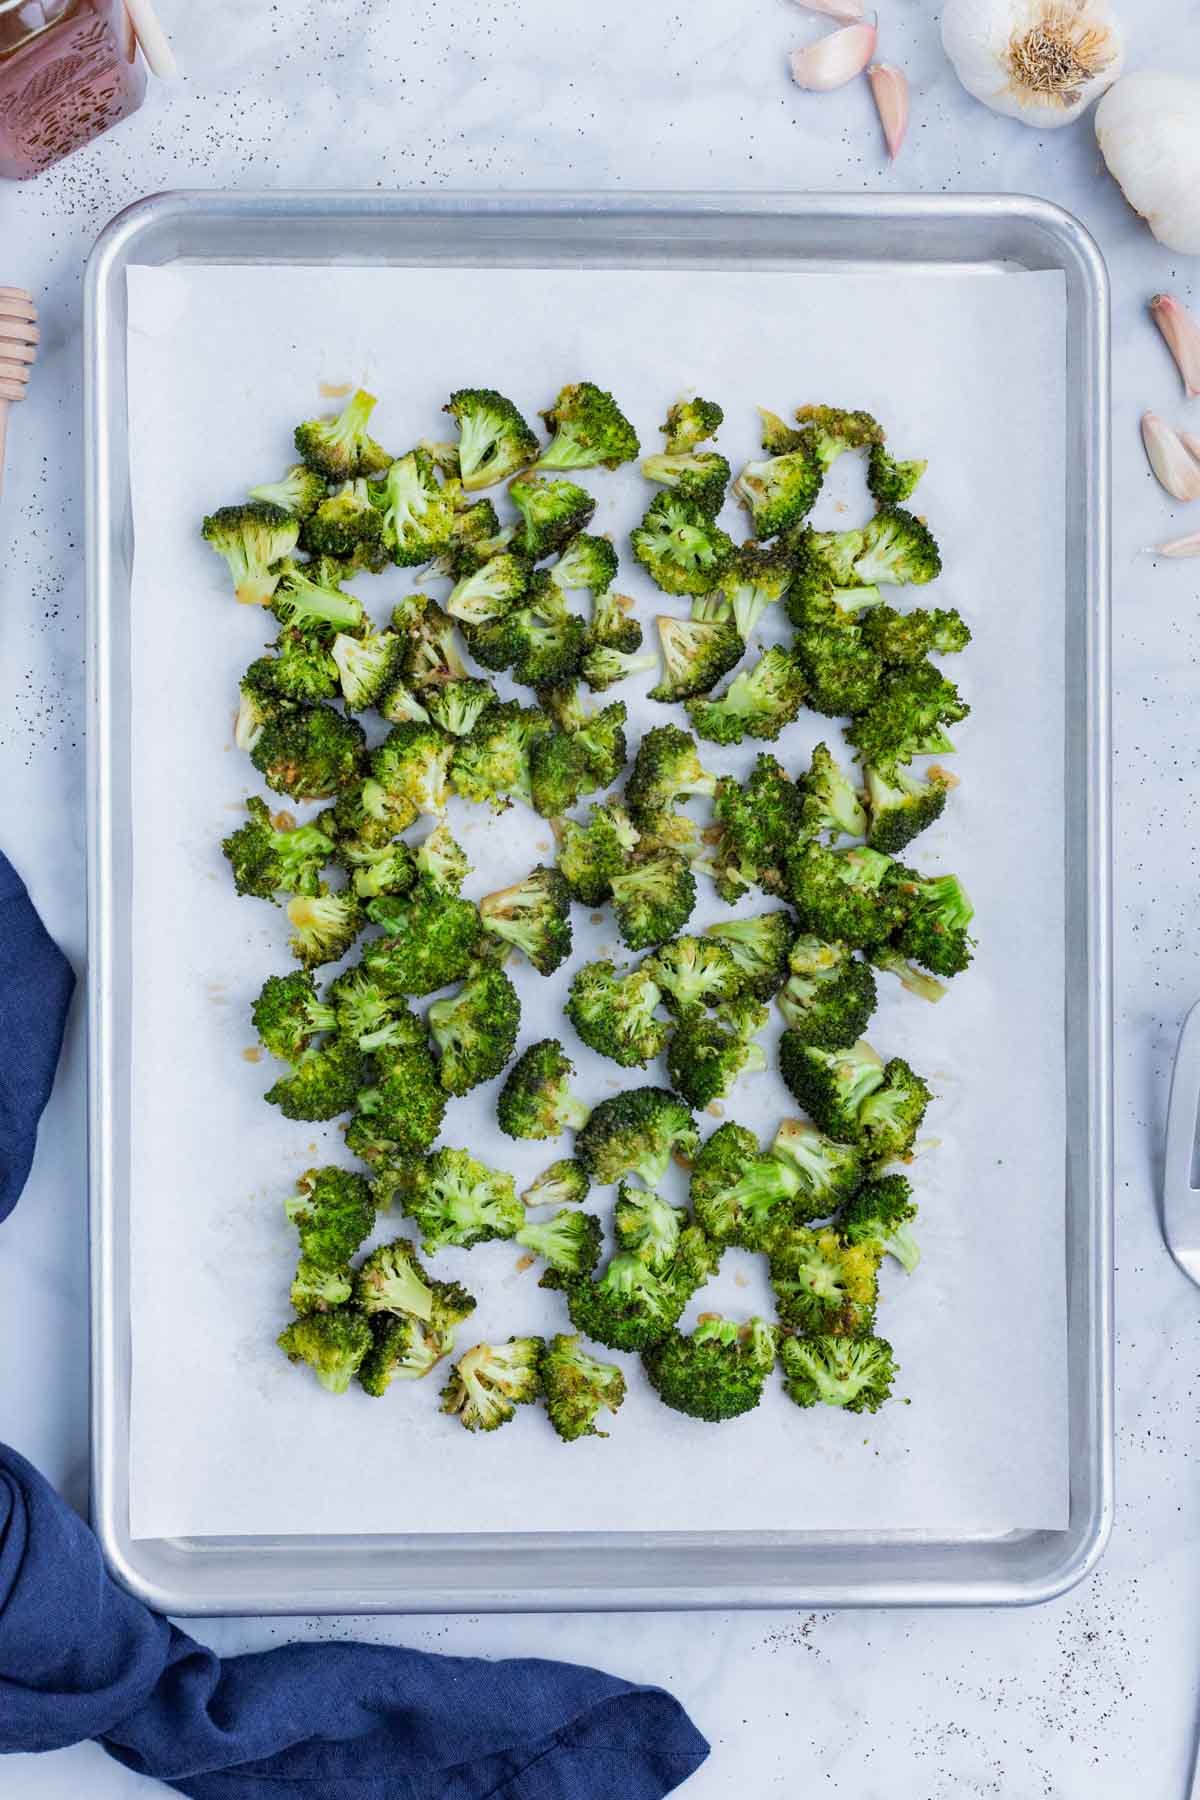 Seasoned broccoli is roasted on a baking sheet.